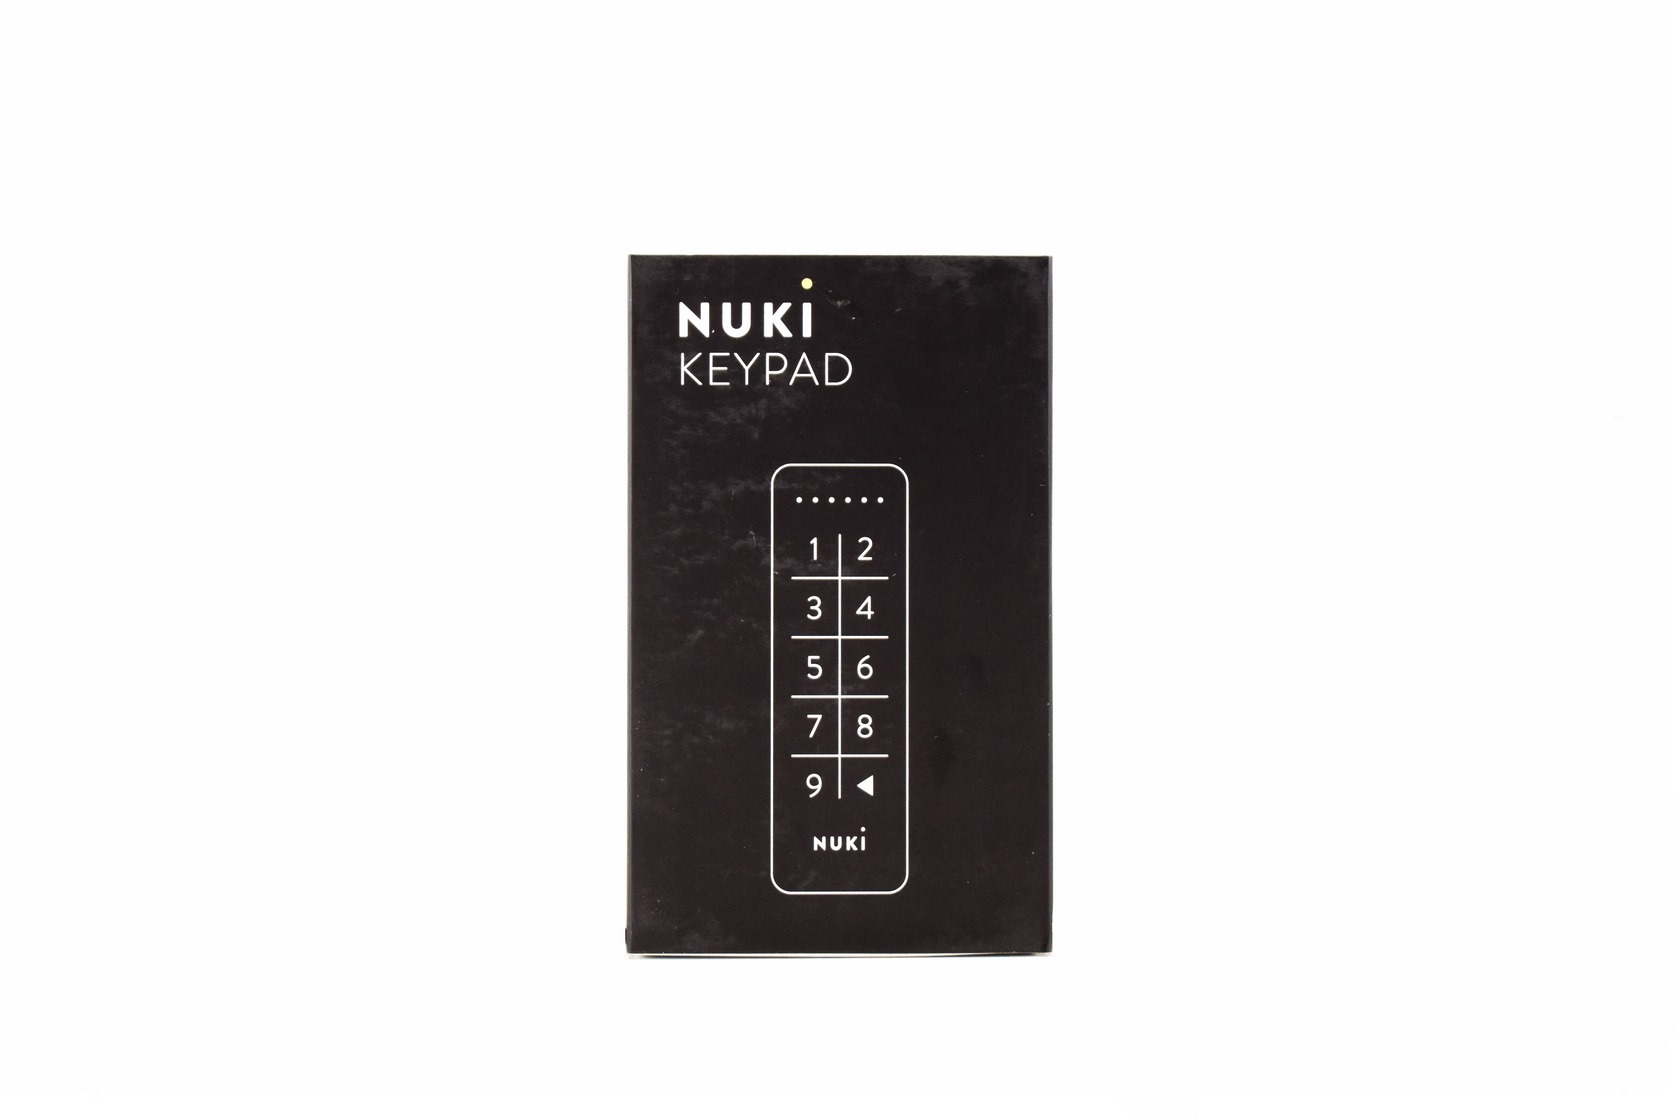 Nuki KeyPad 2.0 Review - An Essential Upgrade?